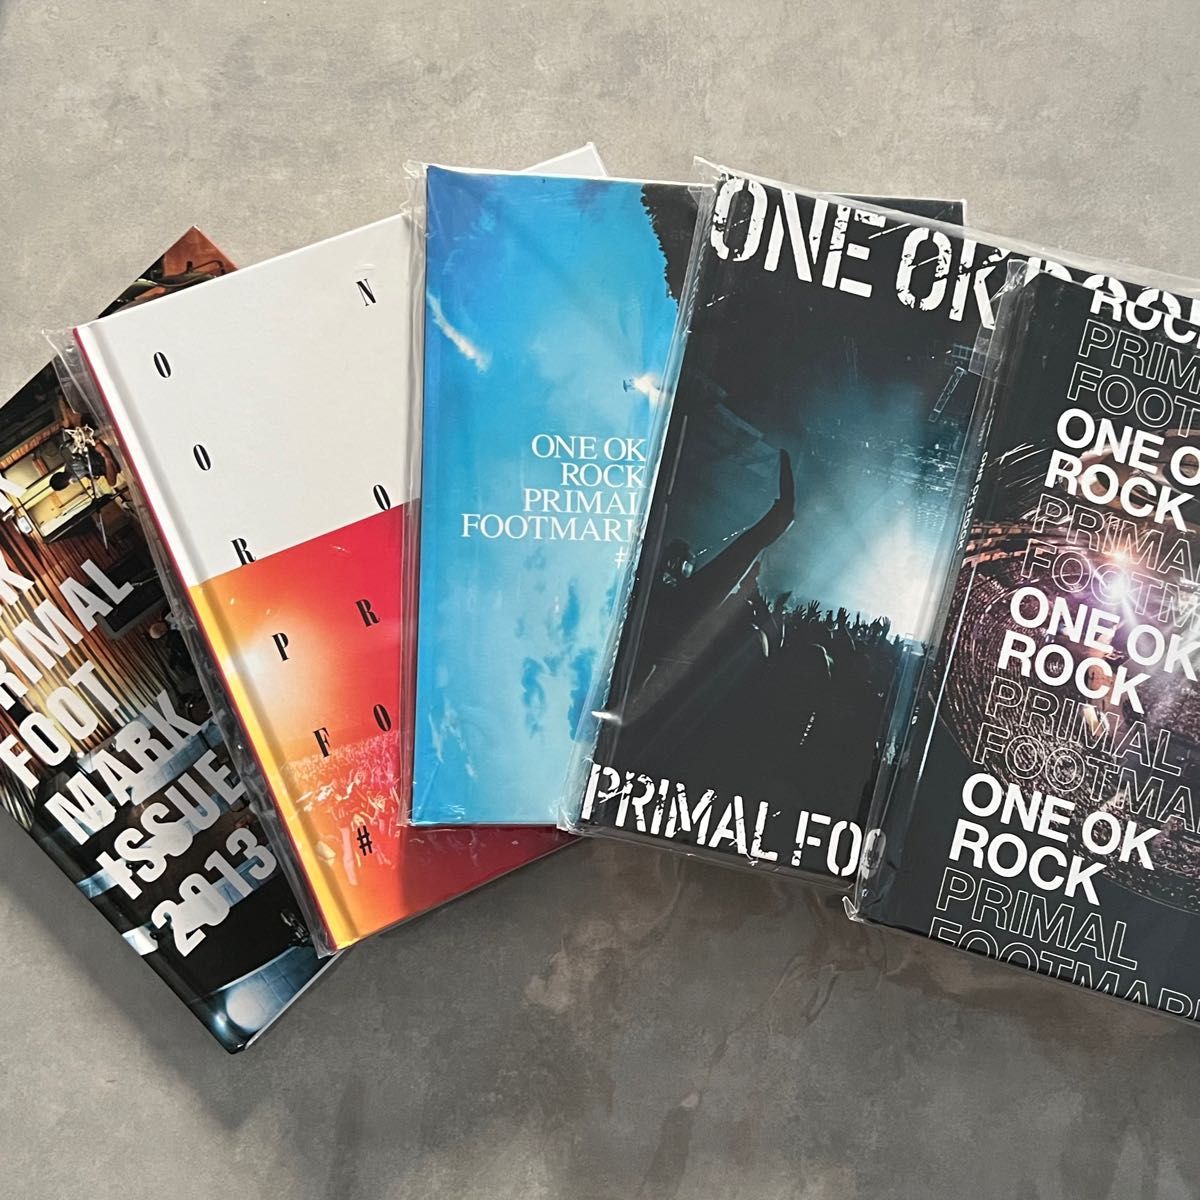 ONE OK ROCK PRIMAL FOOTMARK #7 - ミュージシャン